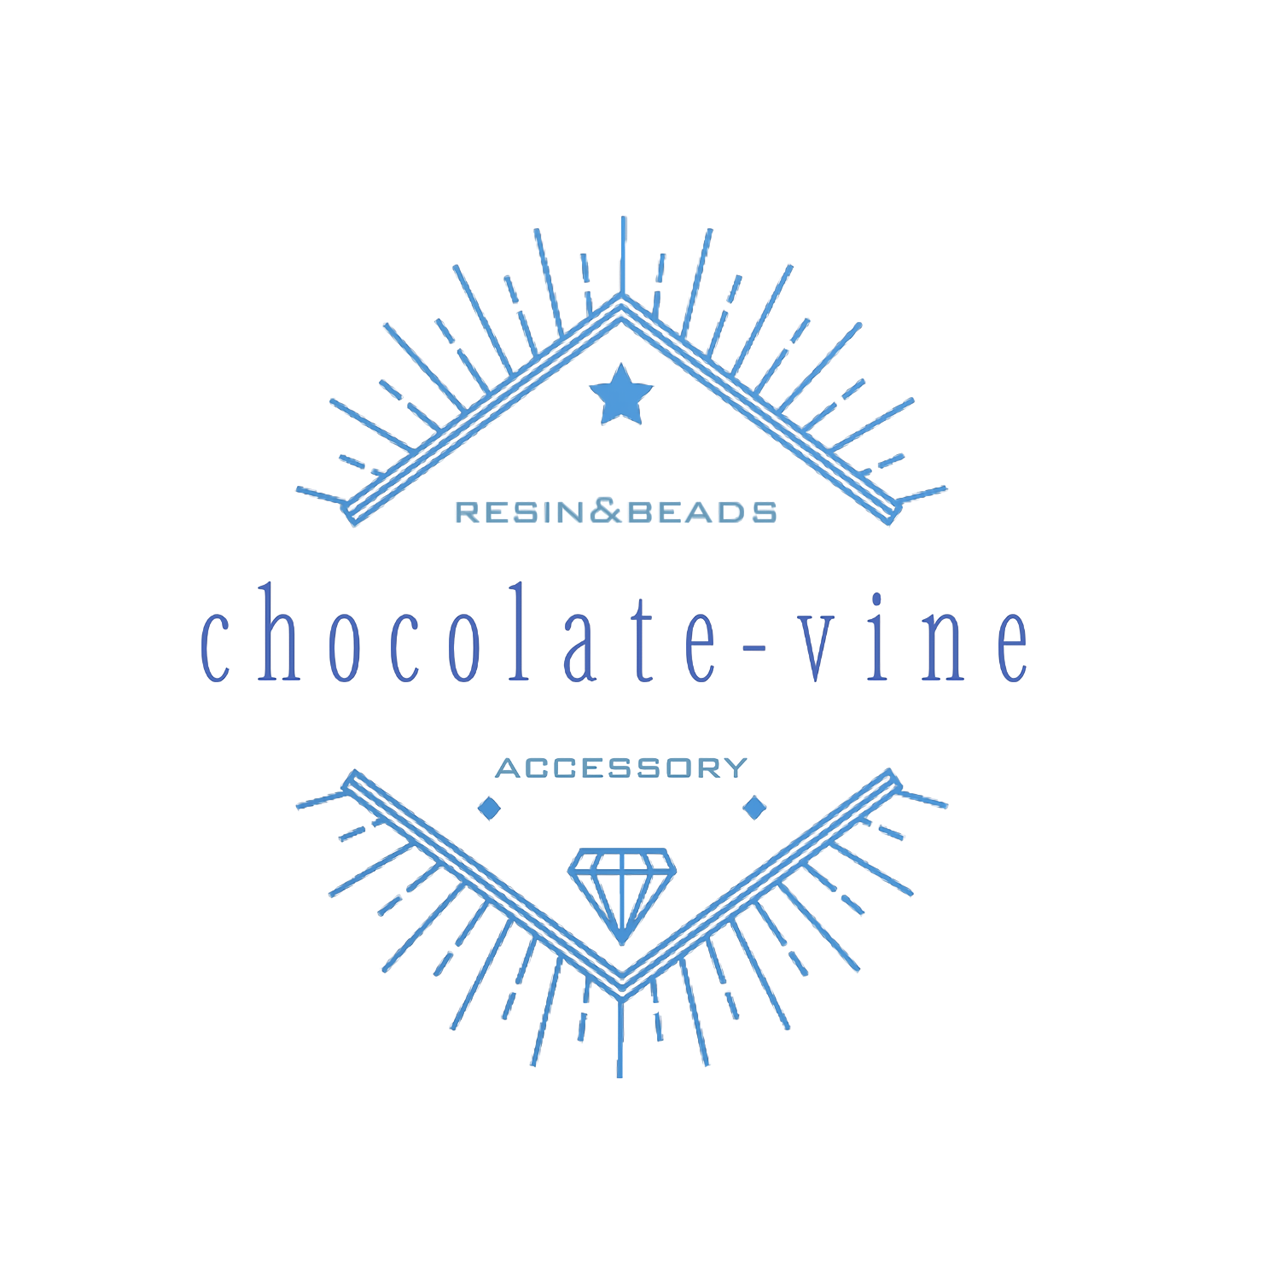 chocolate-vine - チョコレートバイン